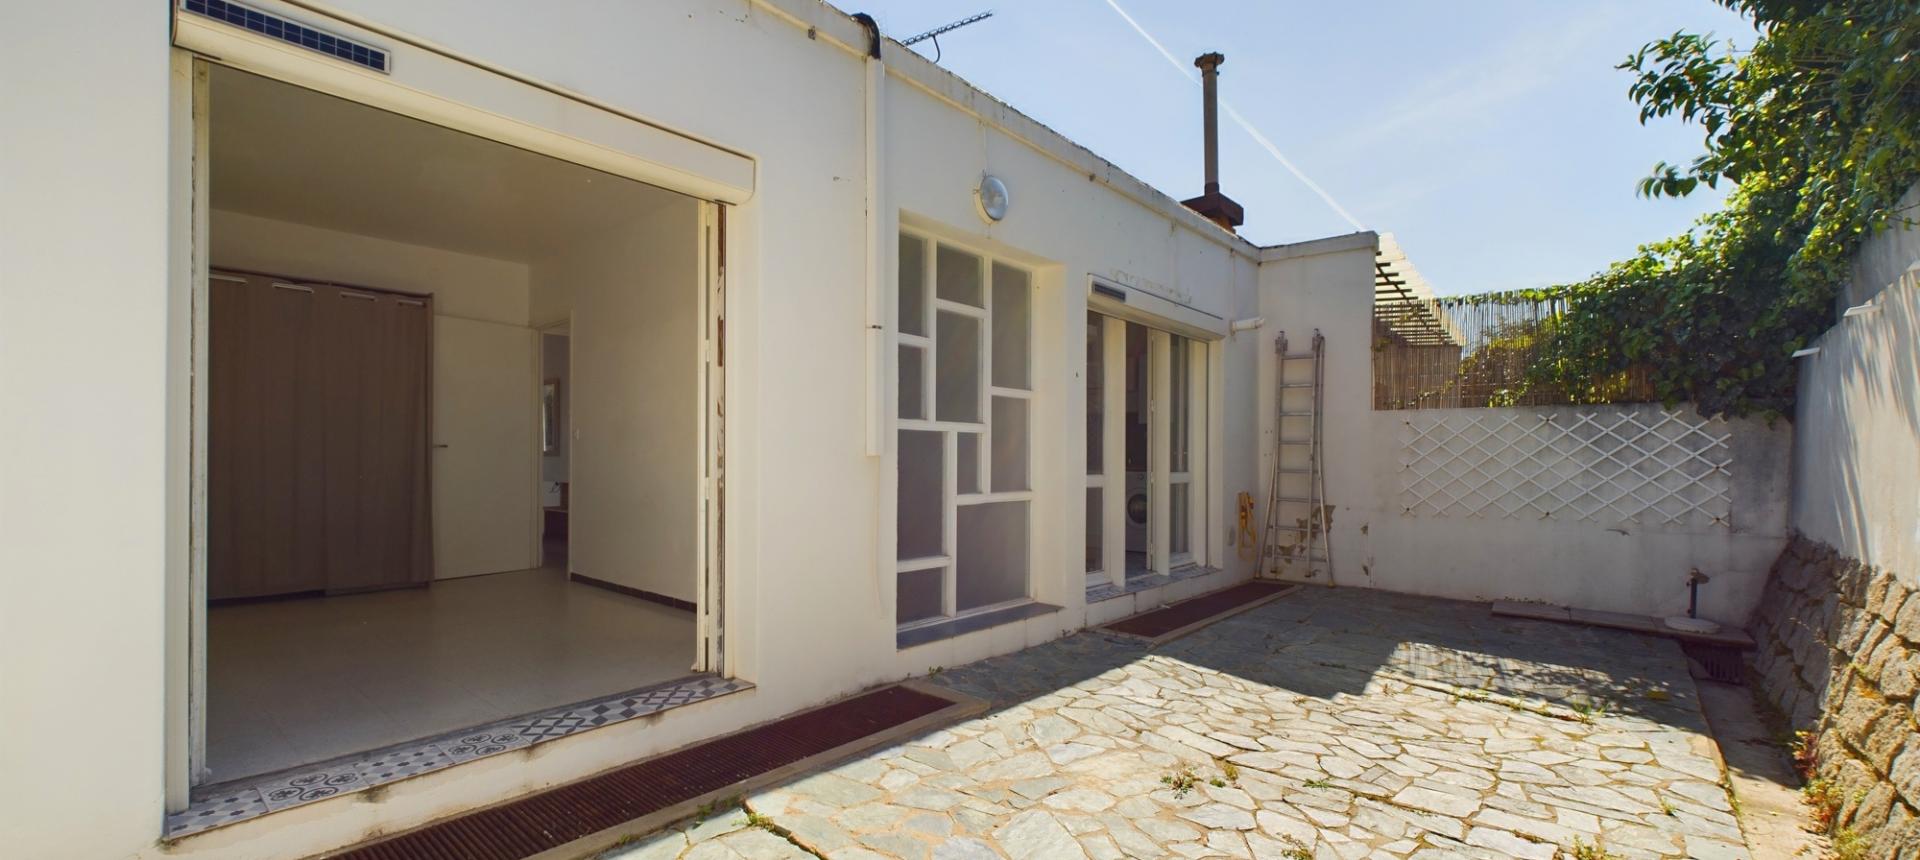 Maison mitoyenne à vendre à Ajaccio, quartier du Salario